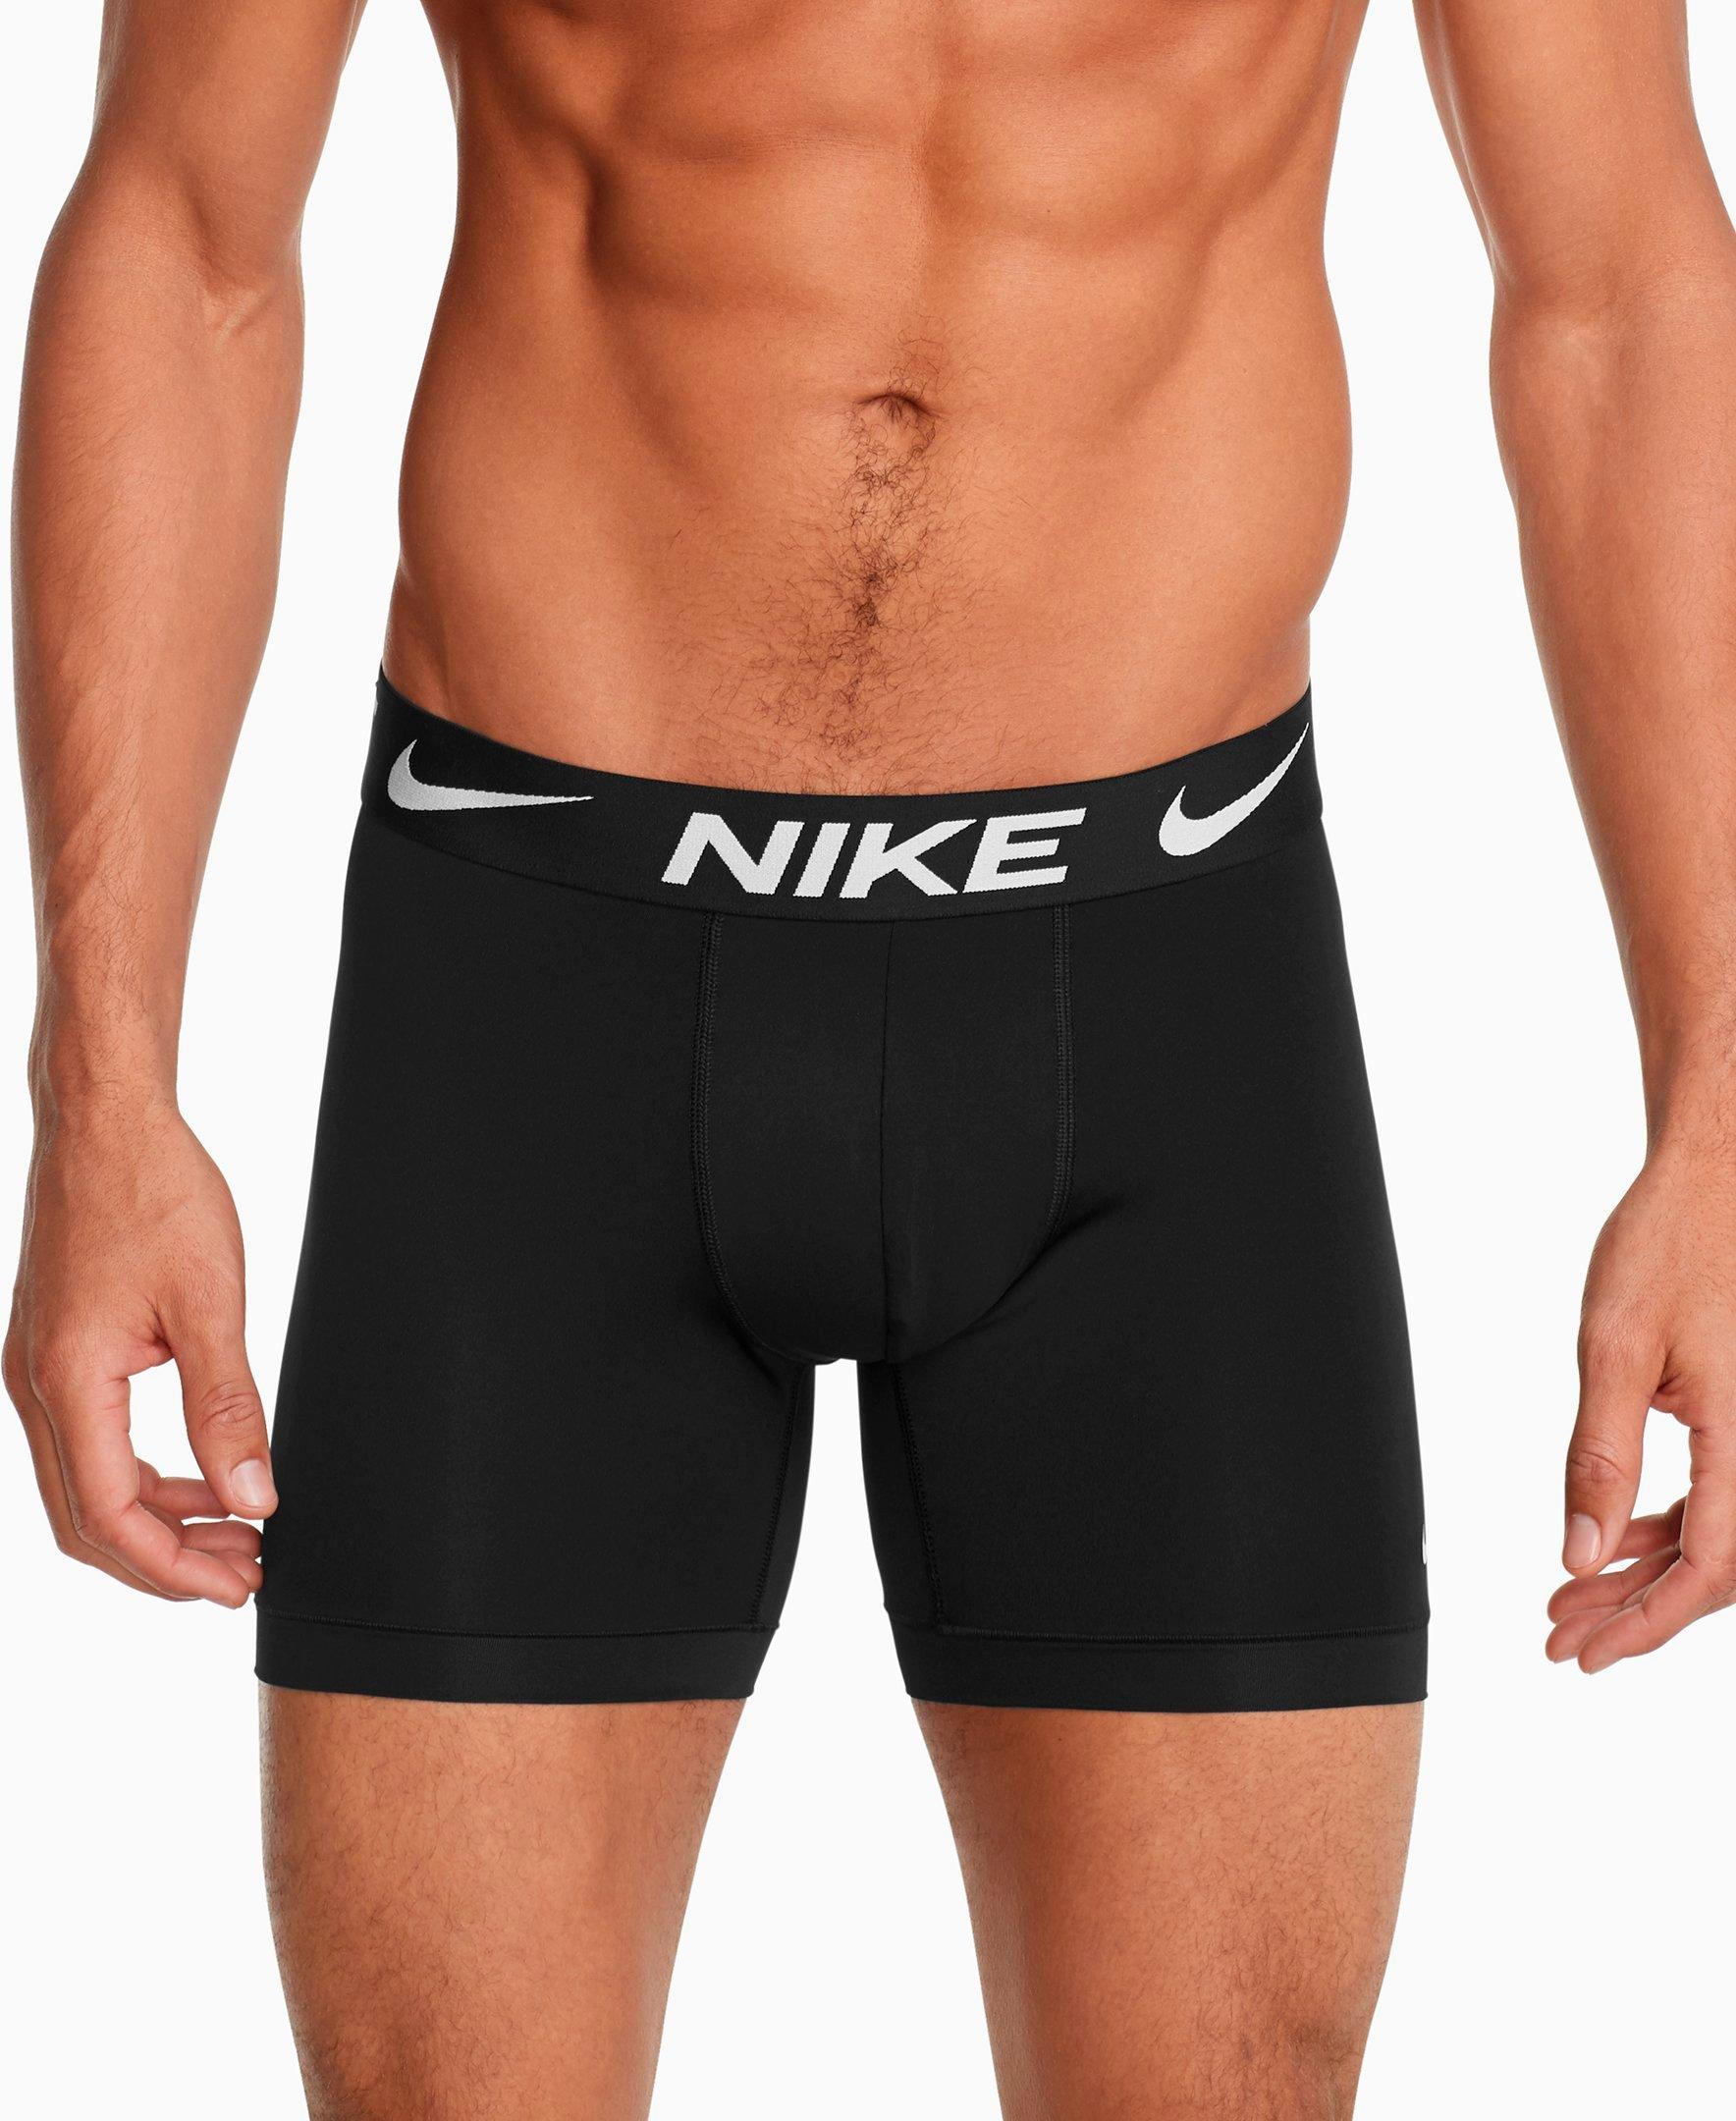 nike underwear boxers